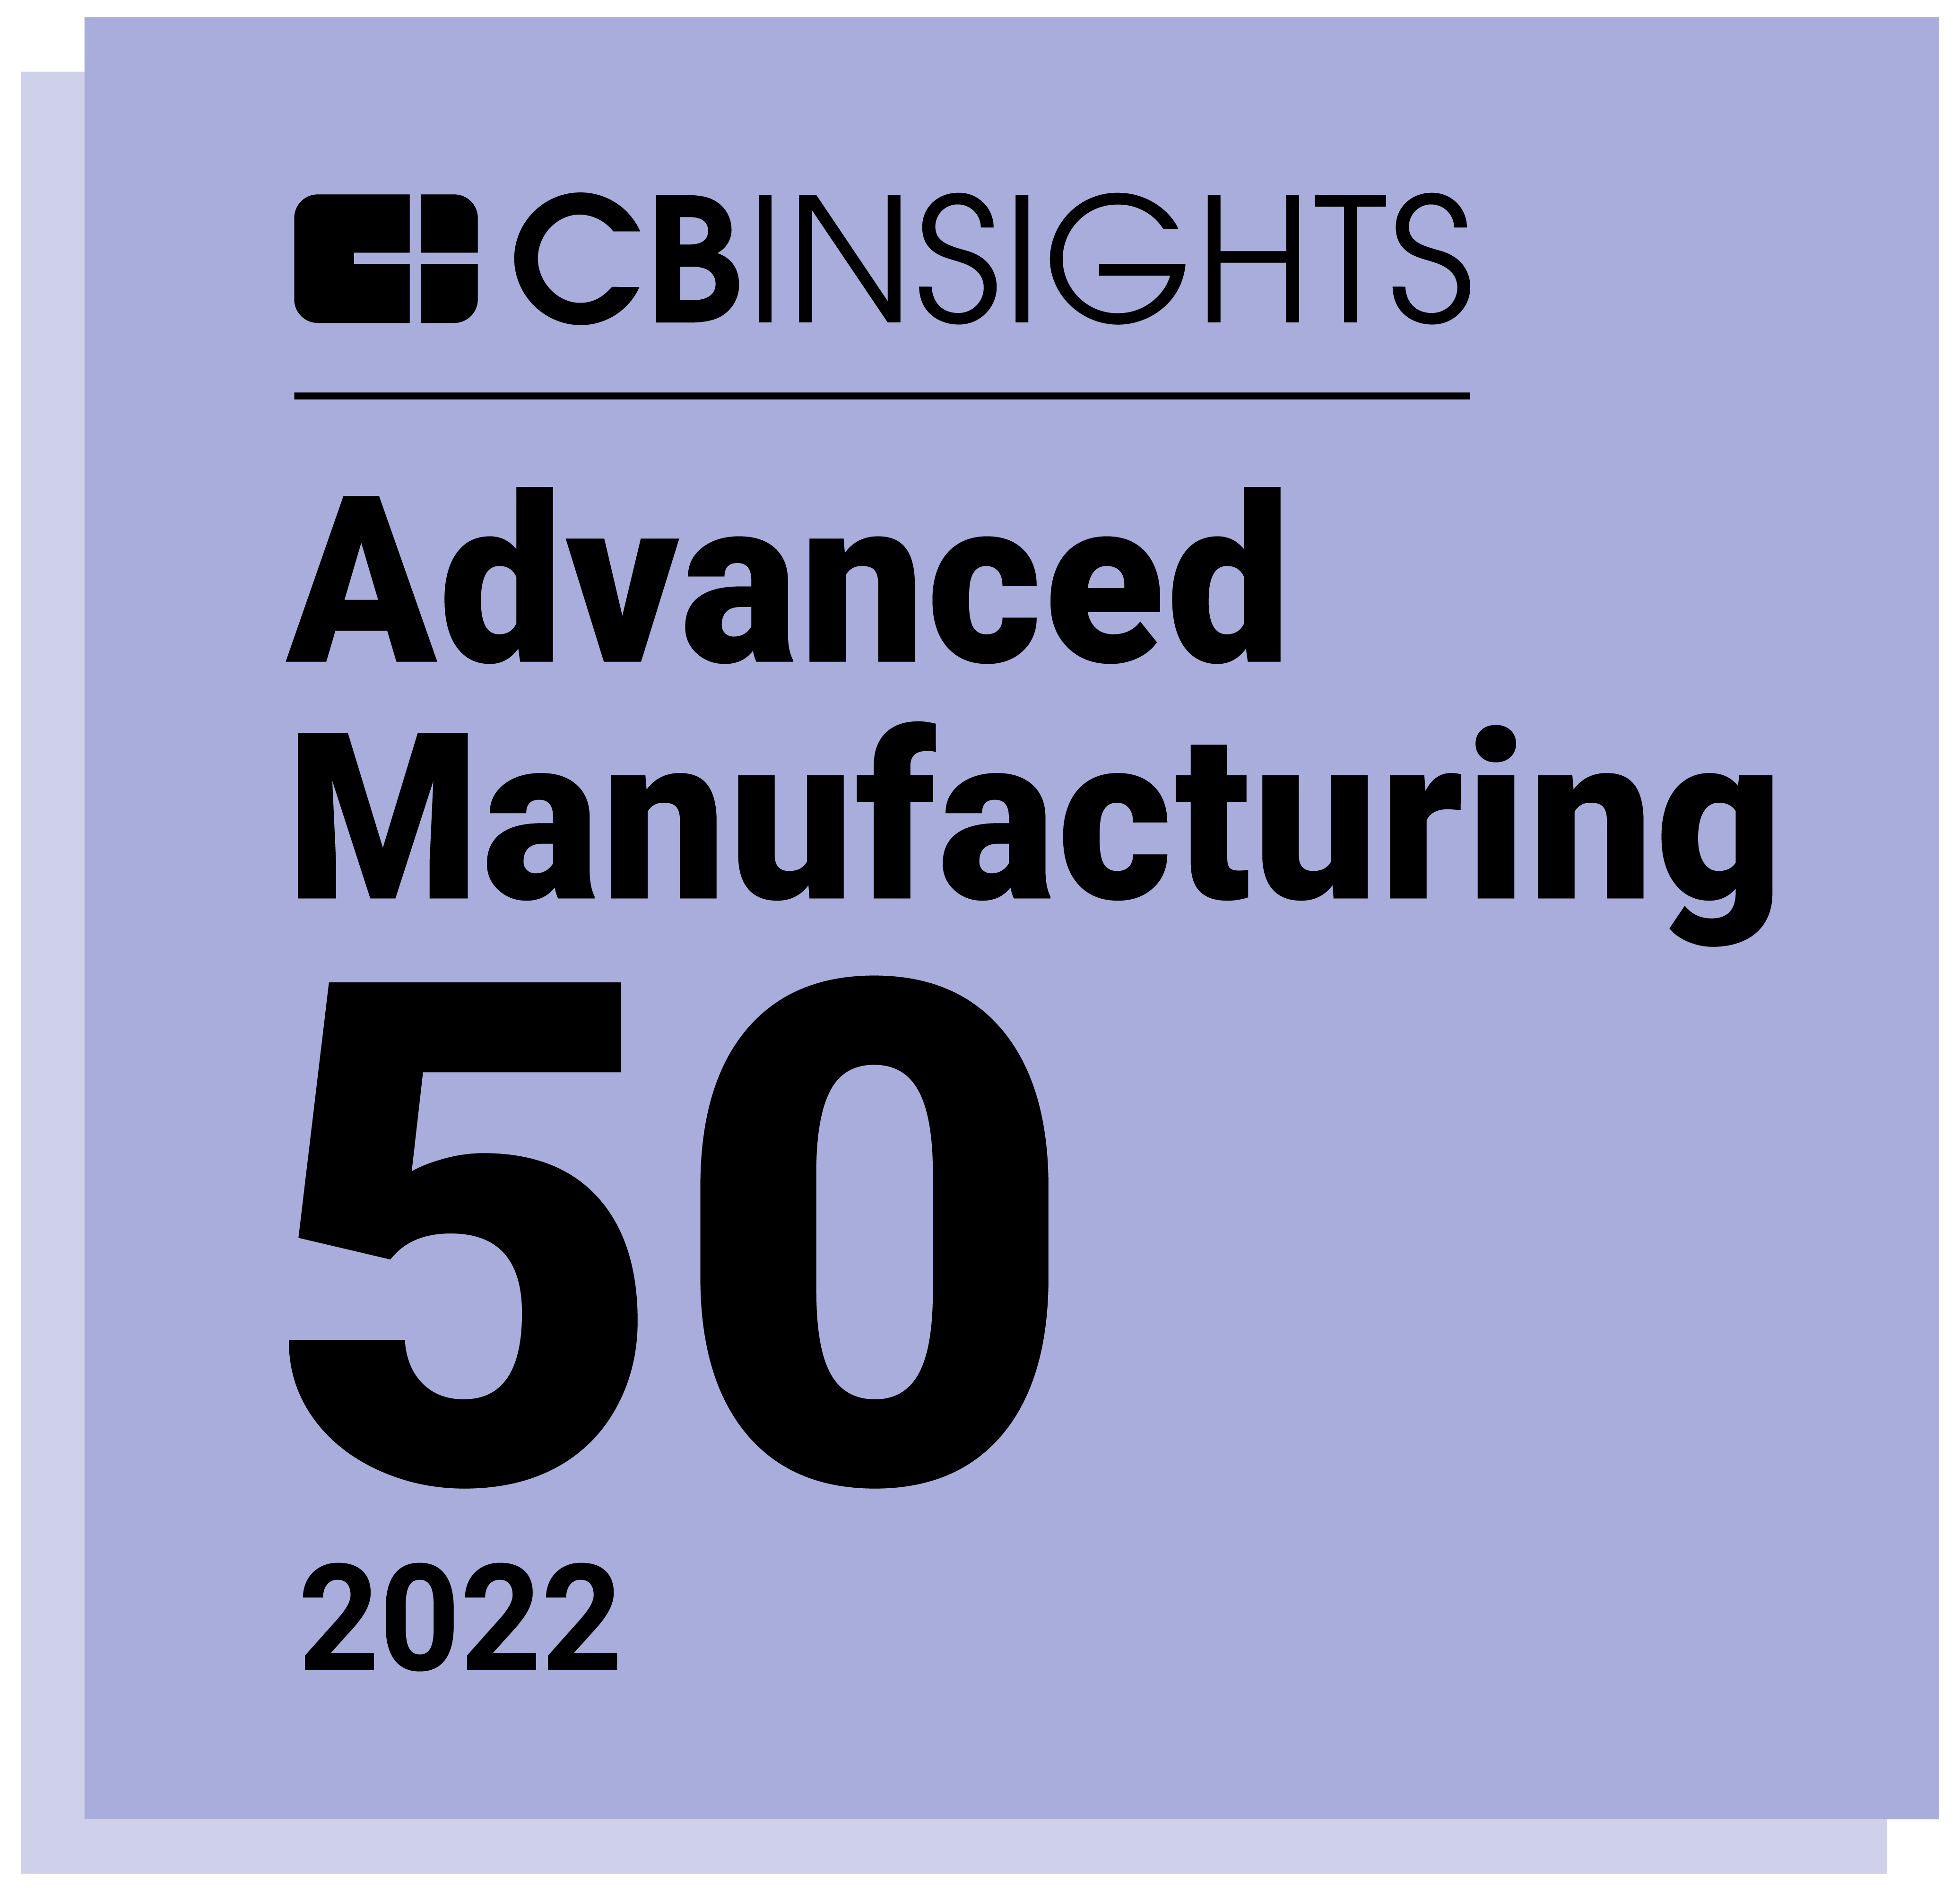 CB Insights Advanced Manufacturing 50 Logo